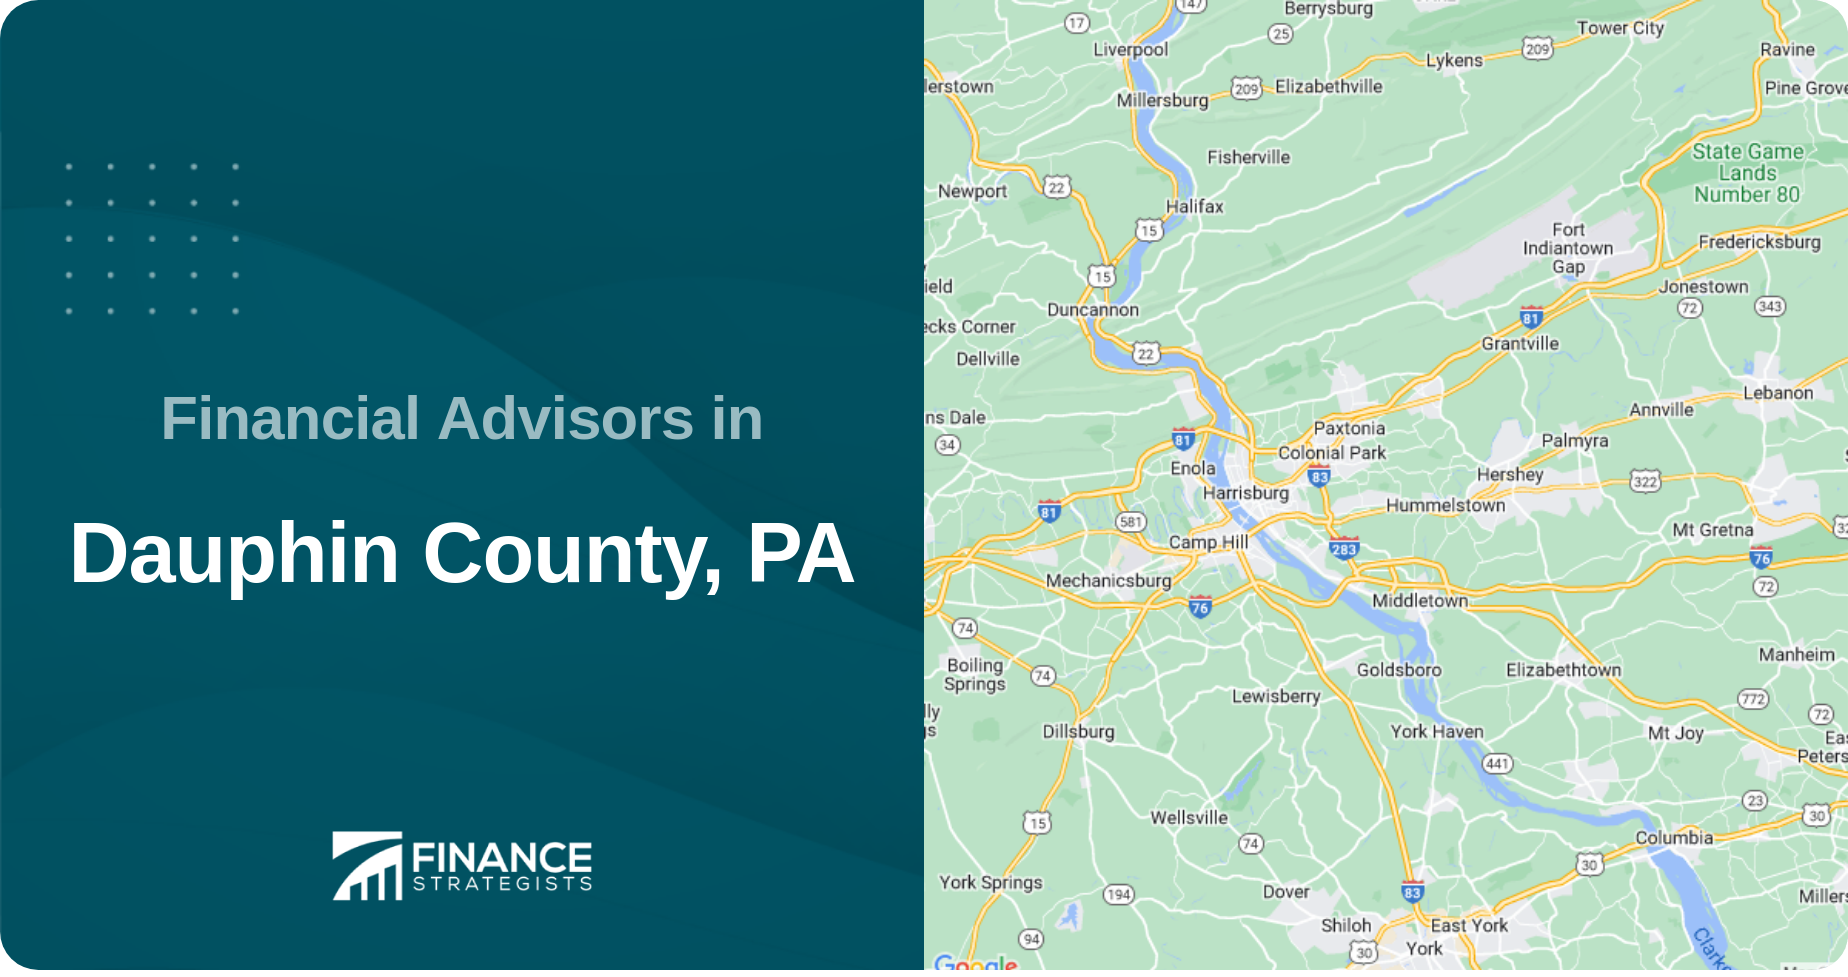 Financial Advisors in Dauphin County, PA